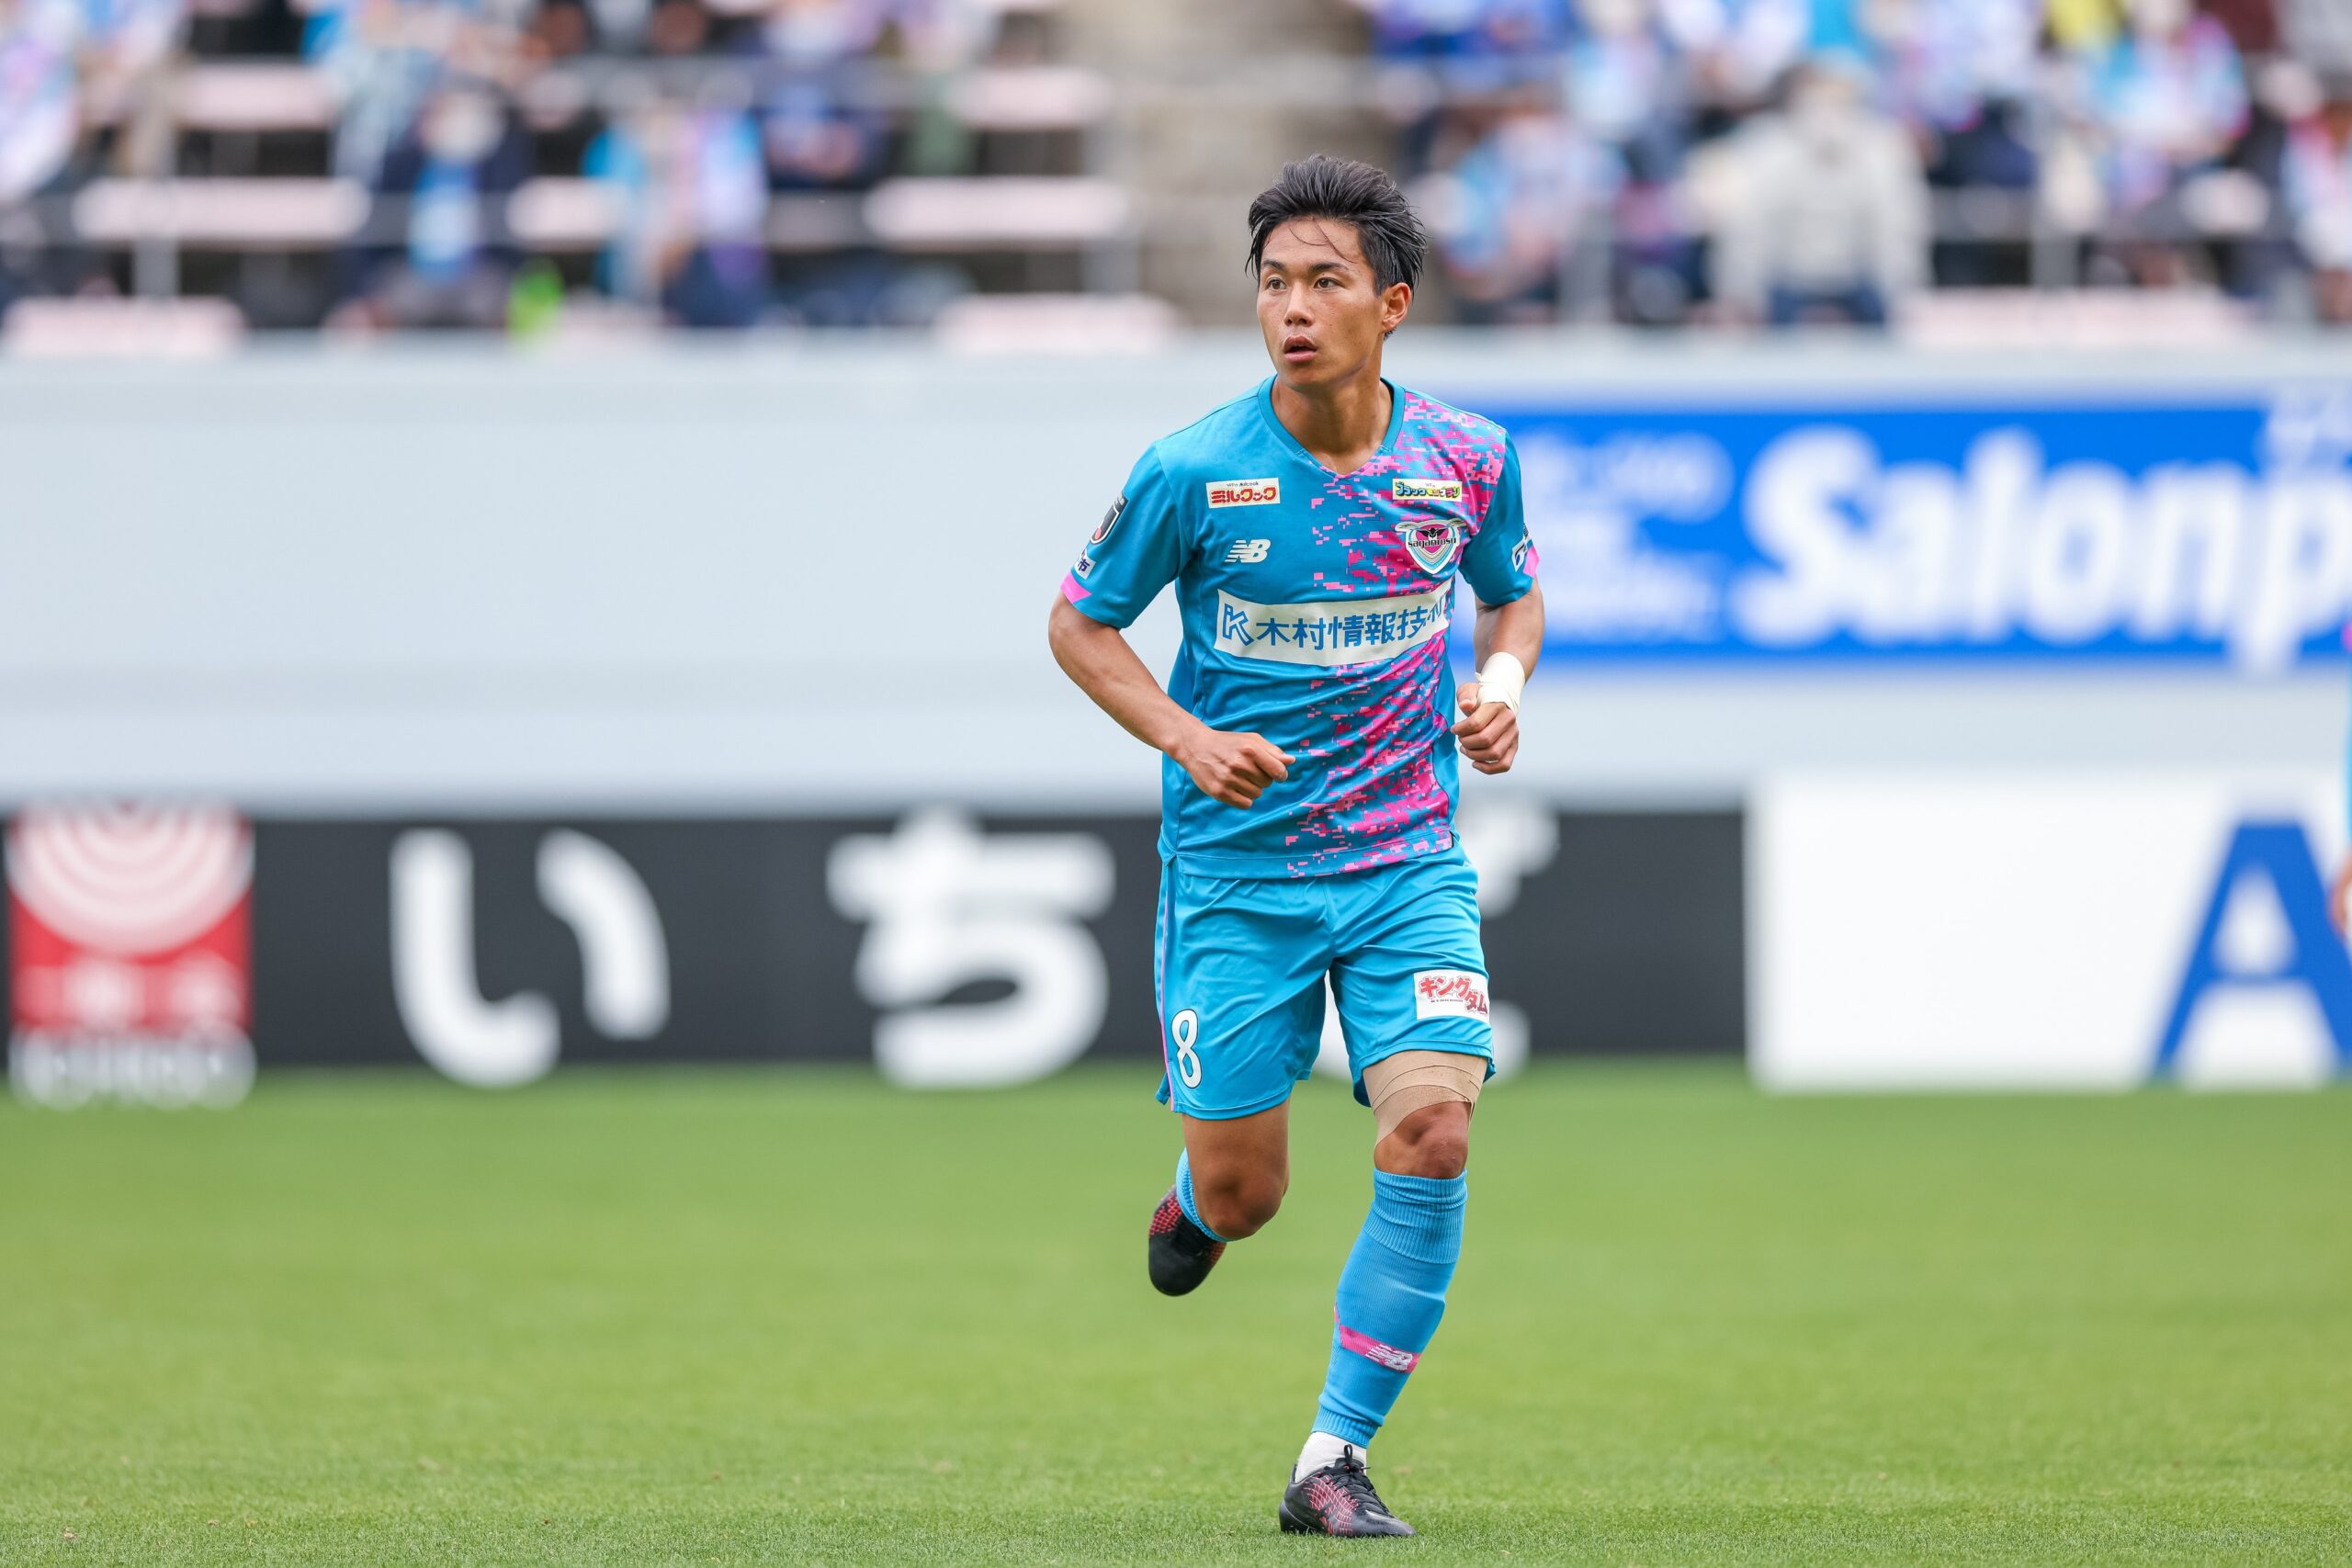 Daichi Hayashi (林 大地) age, position, salary, team, girlfriend, facts, football Career